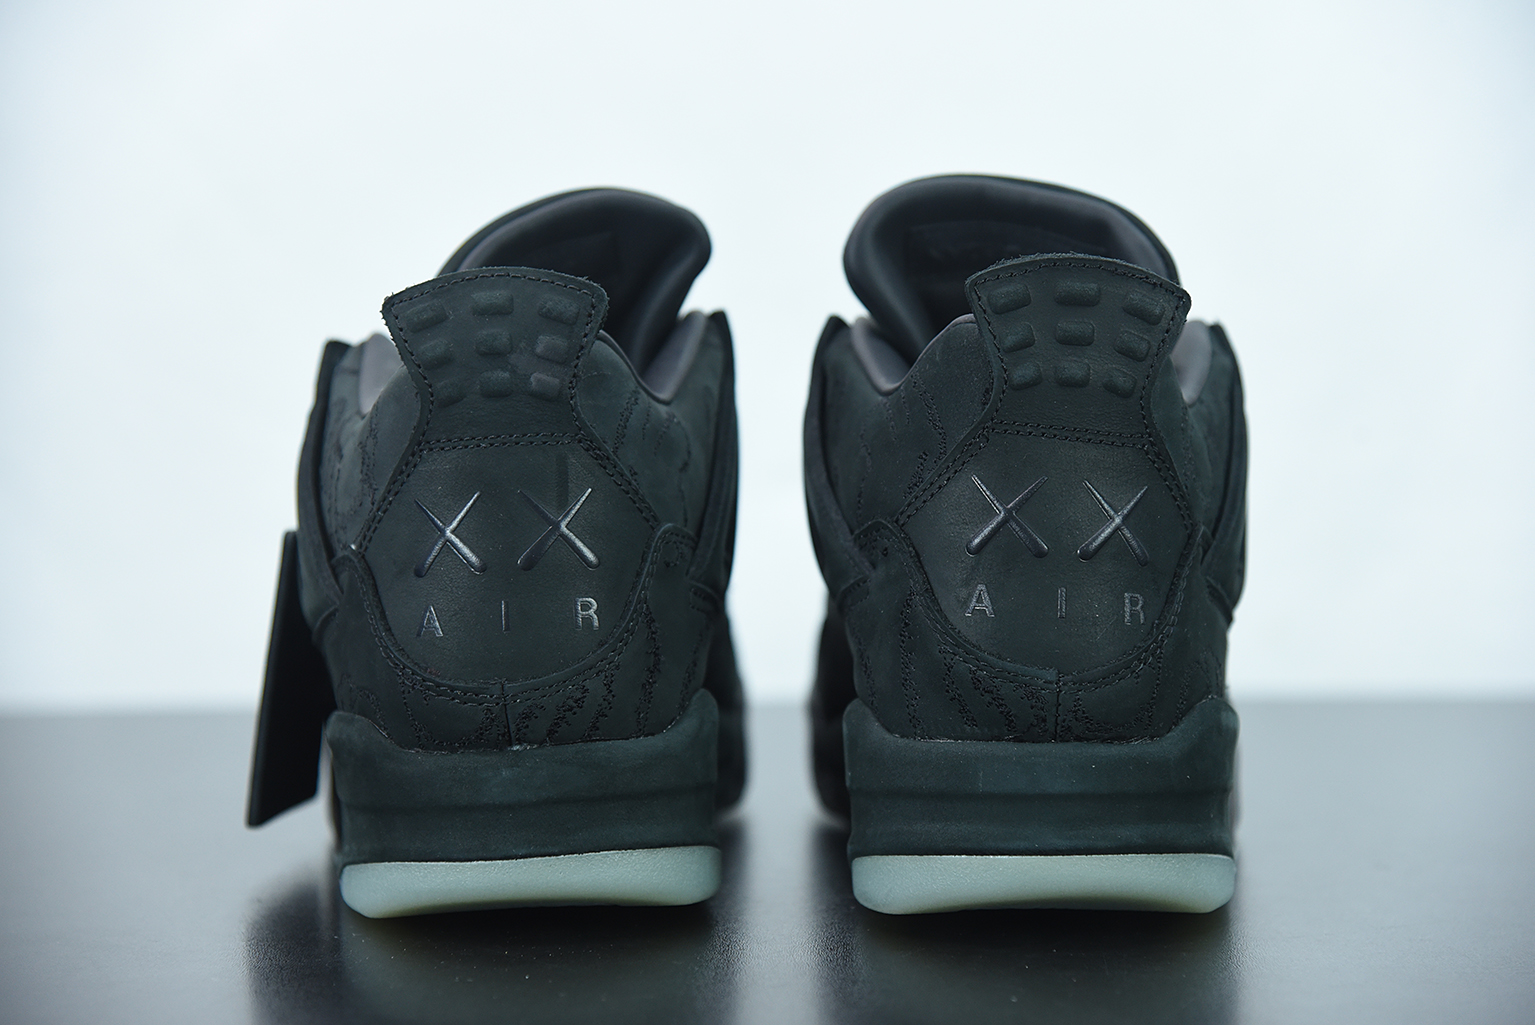 SNKR_TWITR on X: Custom KAWS x Jordan Retro 12 'Cool Grey' via